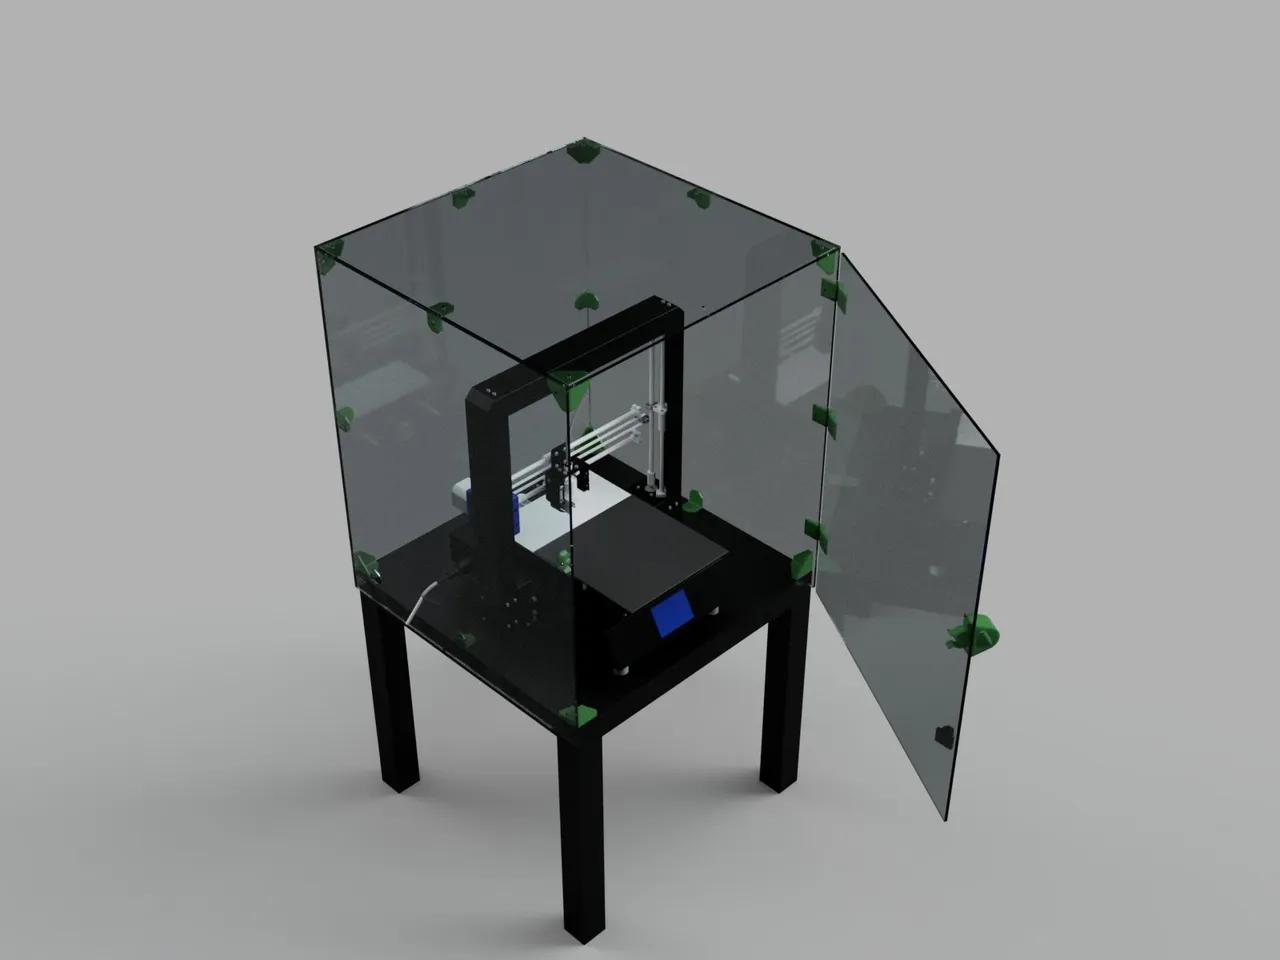 box jellyfish 3D Printer enclosure IKEA LACK table 3d model